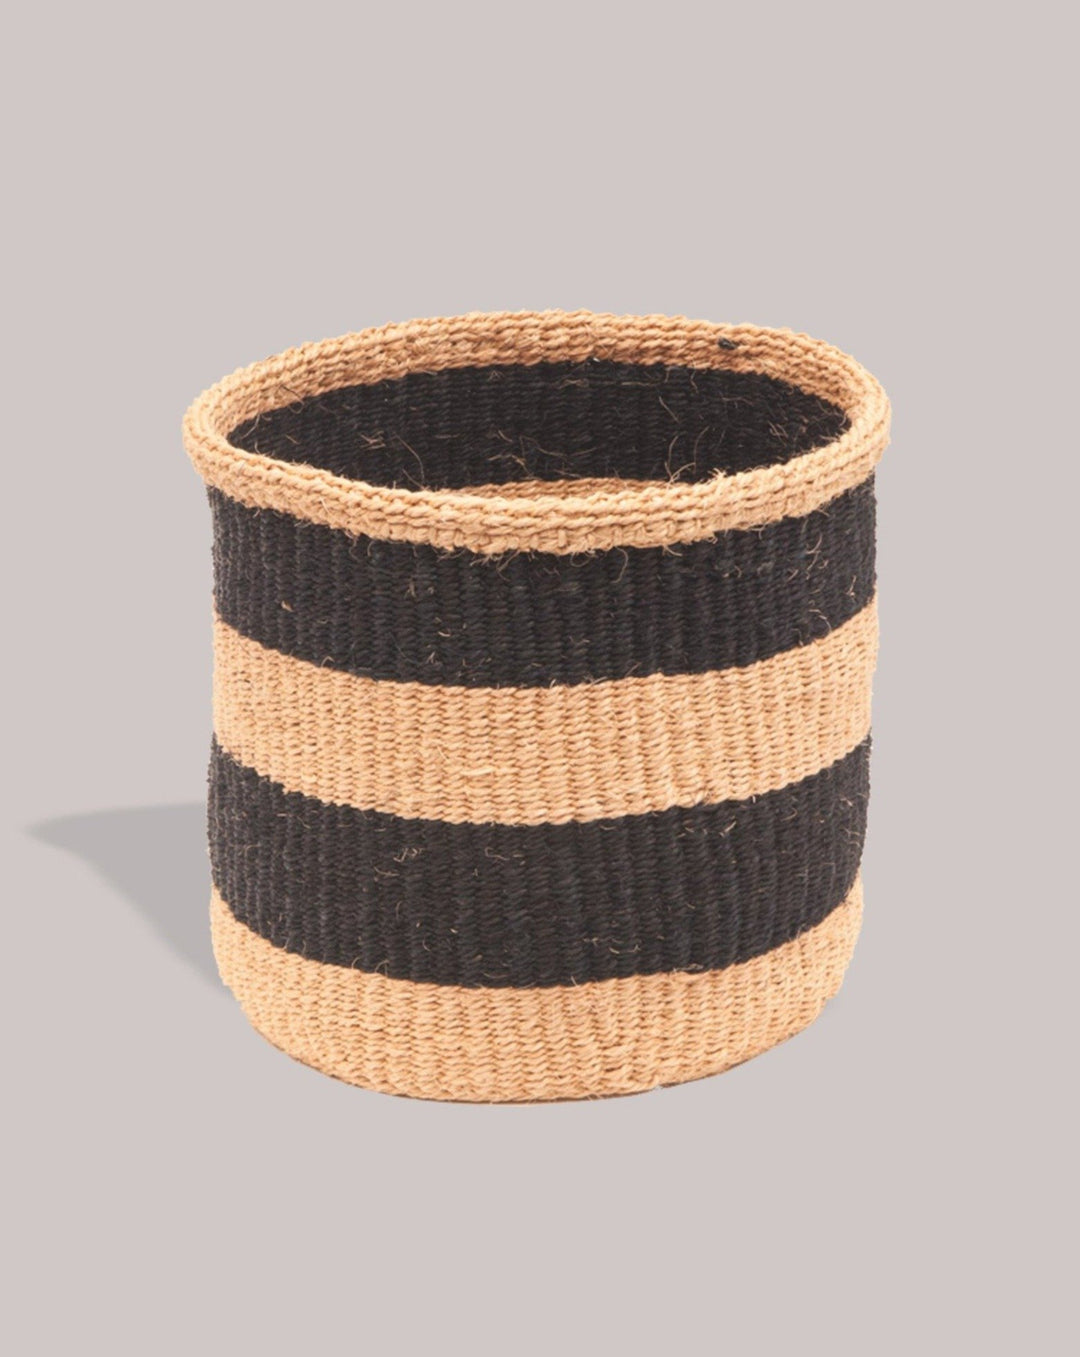 THE BASKET ROOM STORAGE BASKET Mchoro Storage basket, Large - Charcoal + Sand Sustainable Home Baskets | Mchoro Charcoal & Sand | 3133